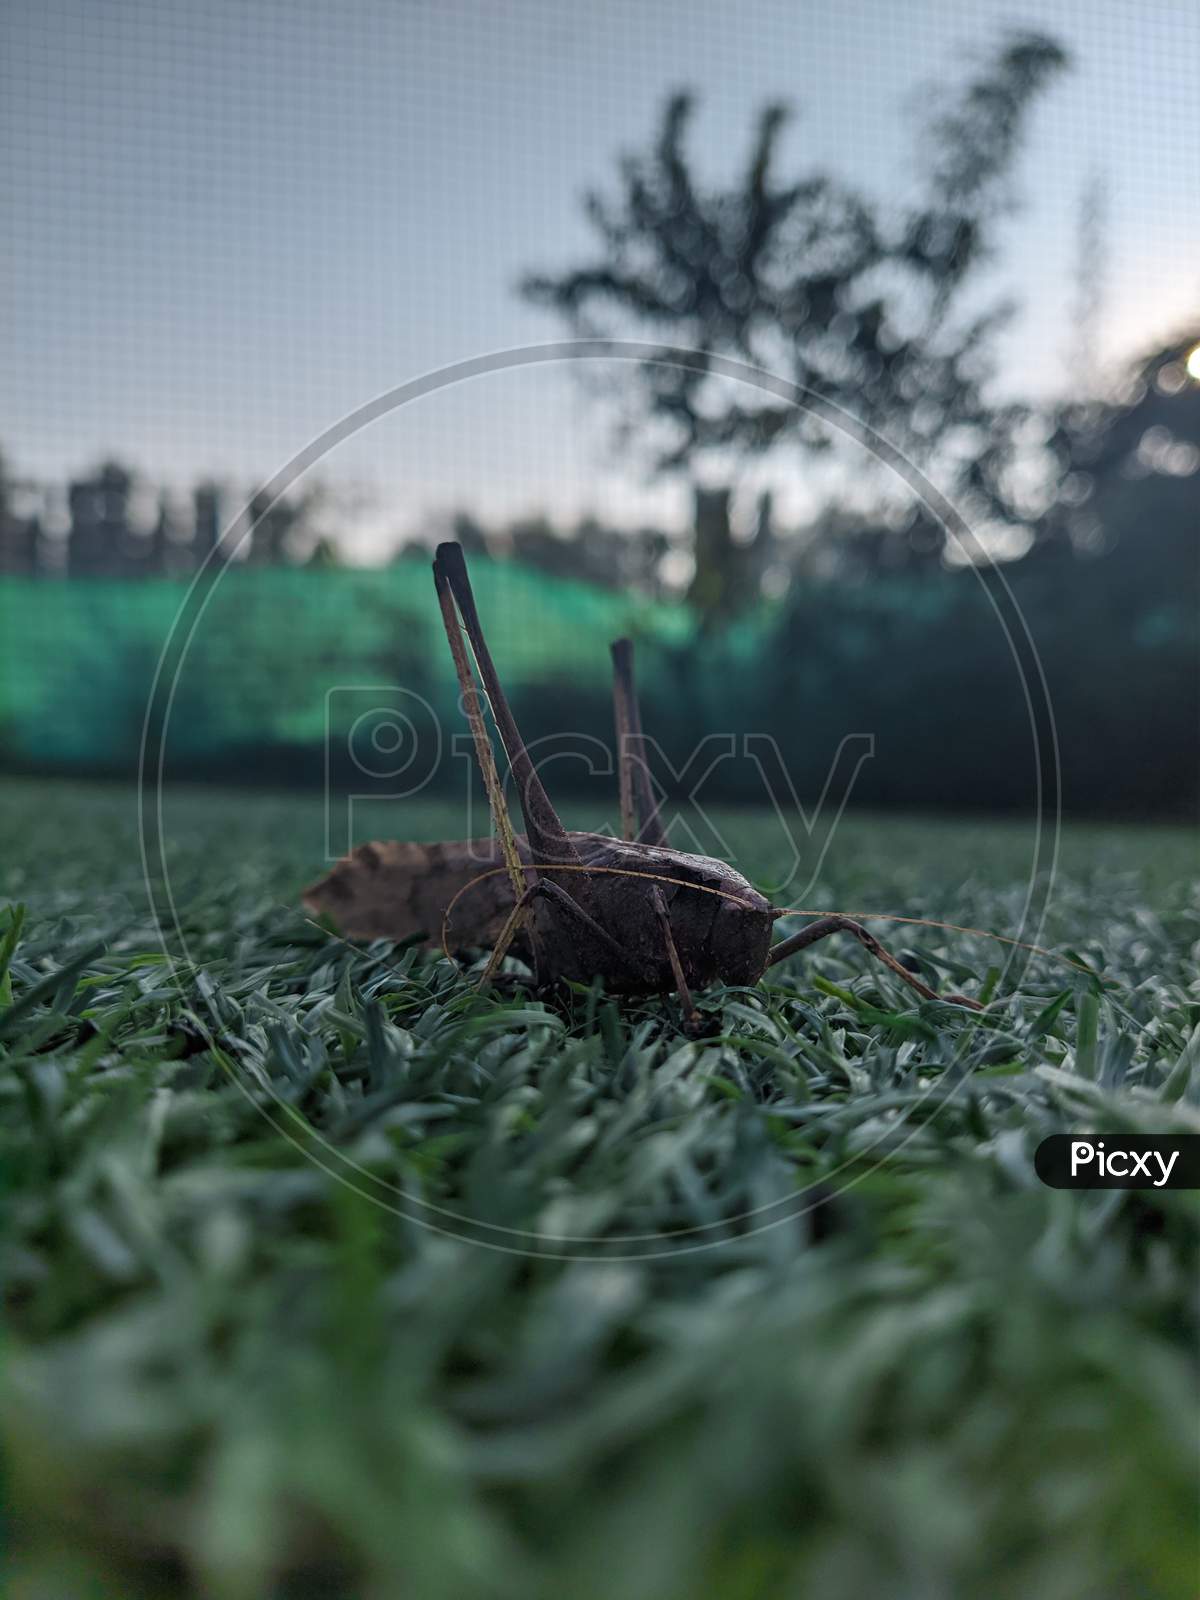 Crickets in grass